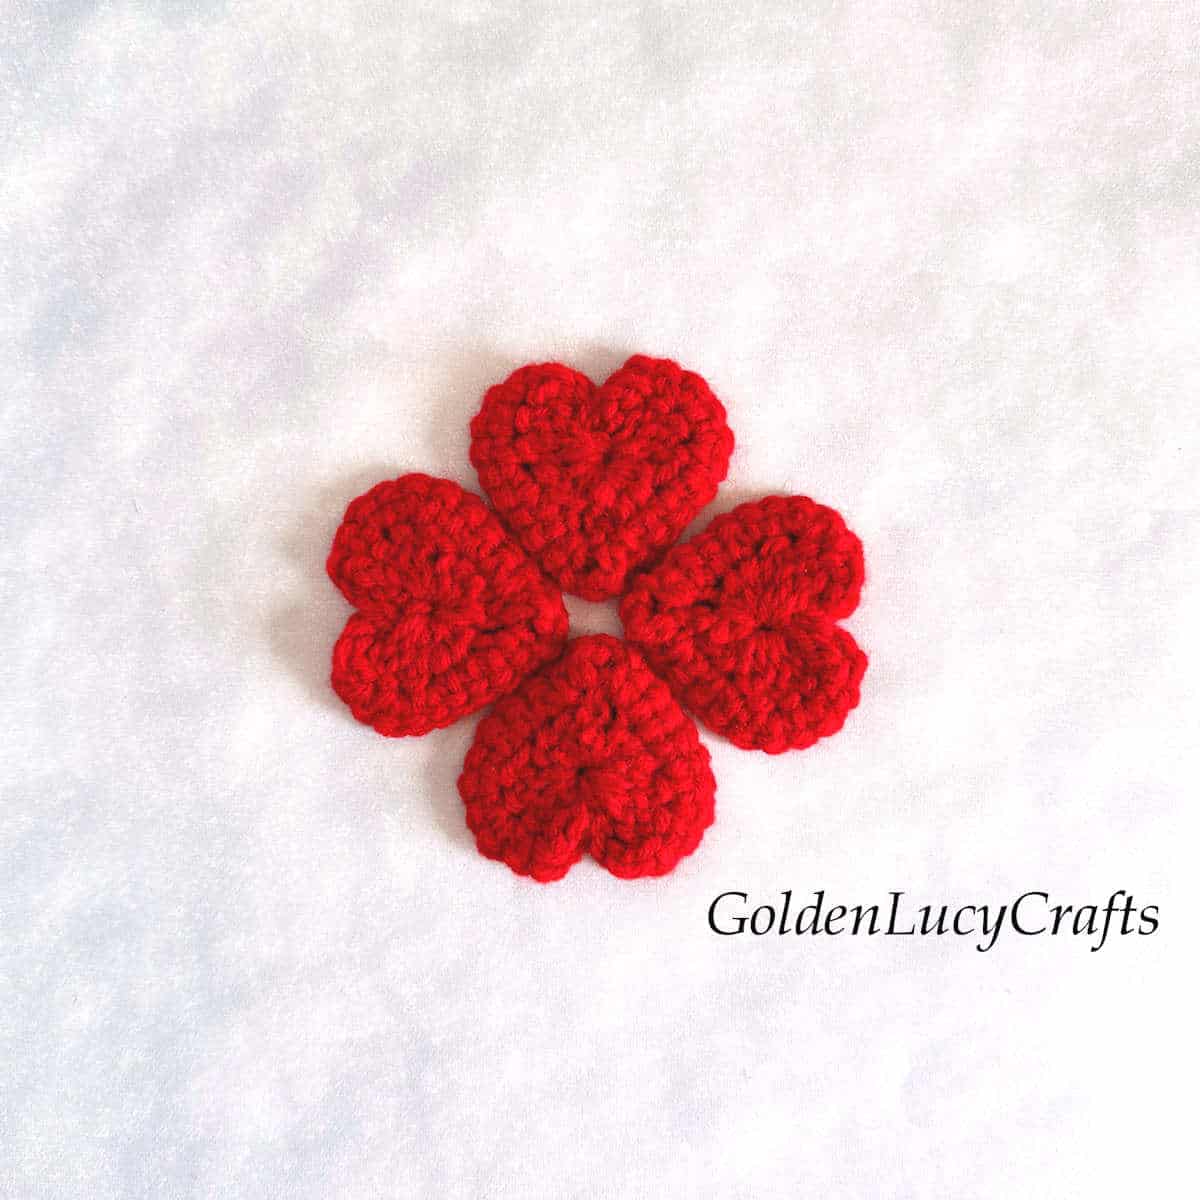 Crochet poppy - back side.